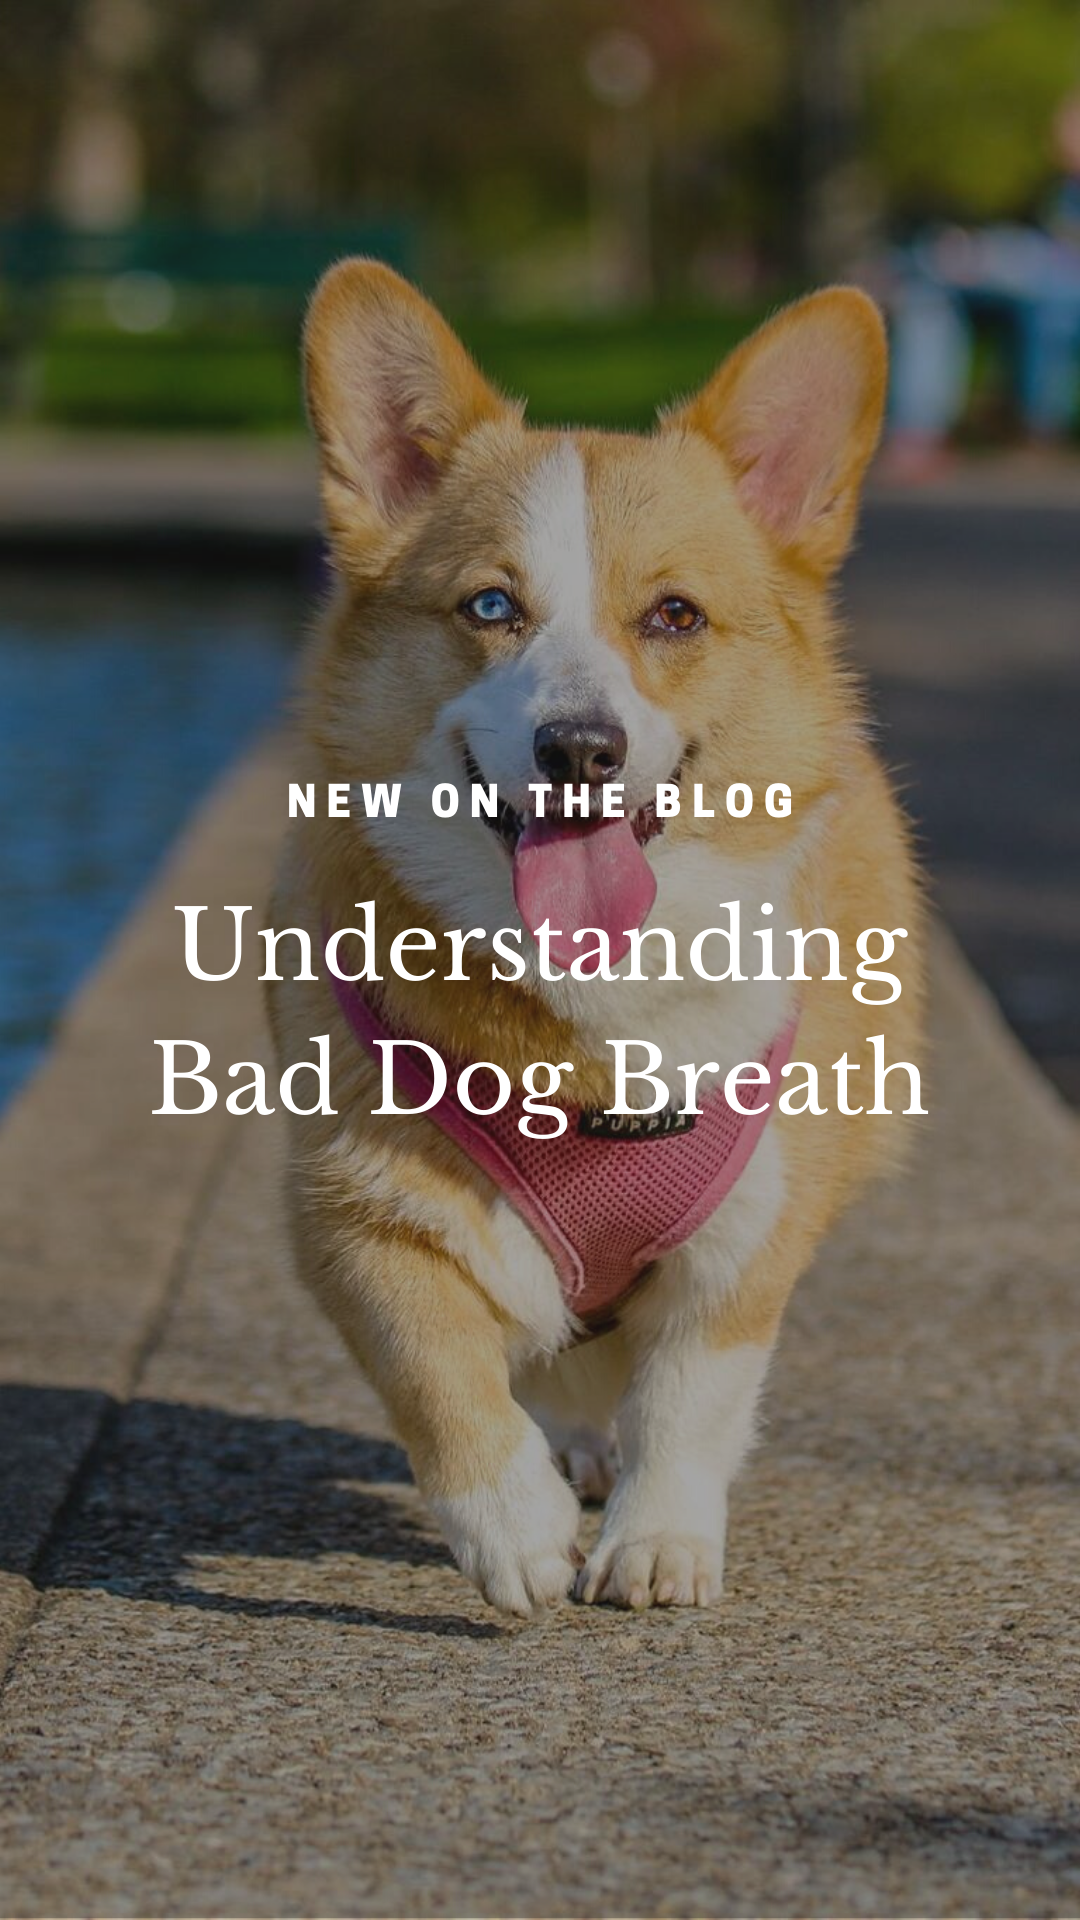 Understanding Bad Dog Breath — River Landings Animal Clinic in Bradenton,  Florida